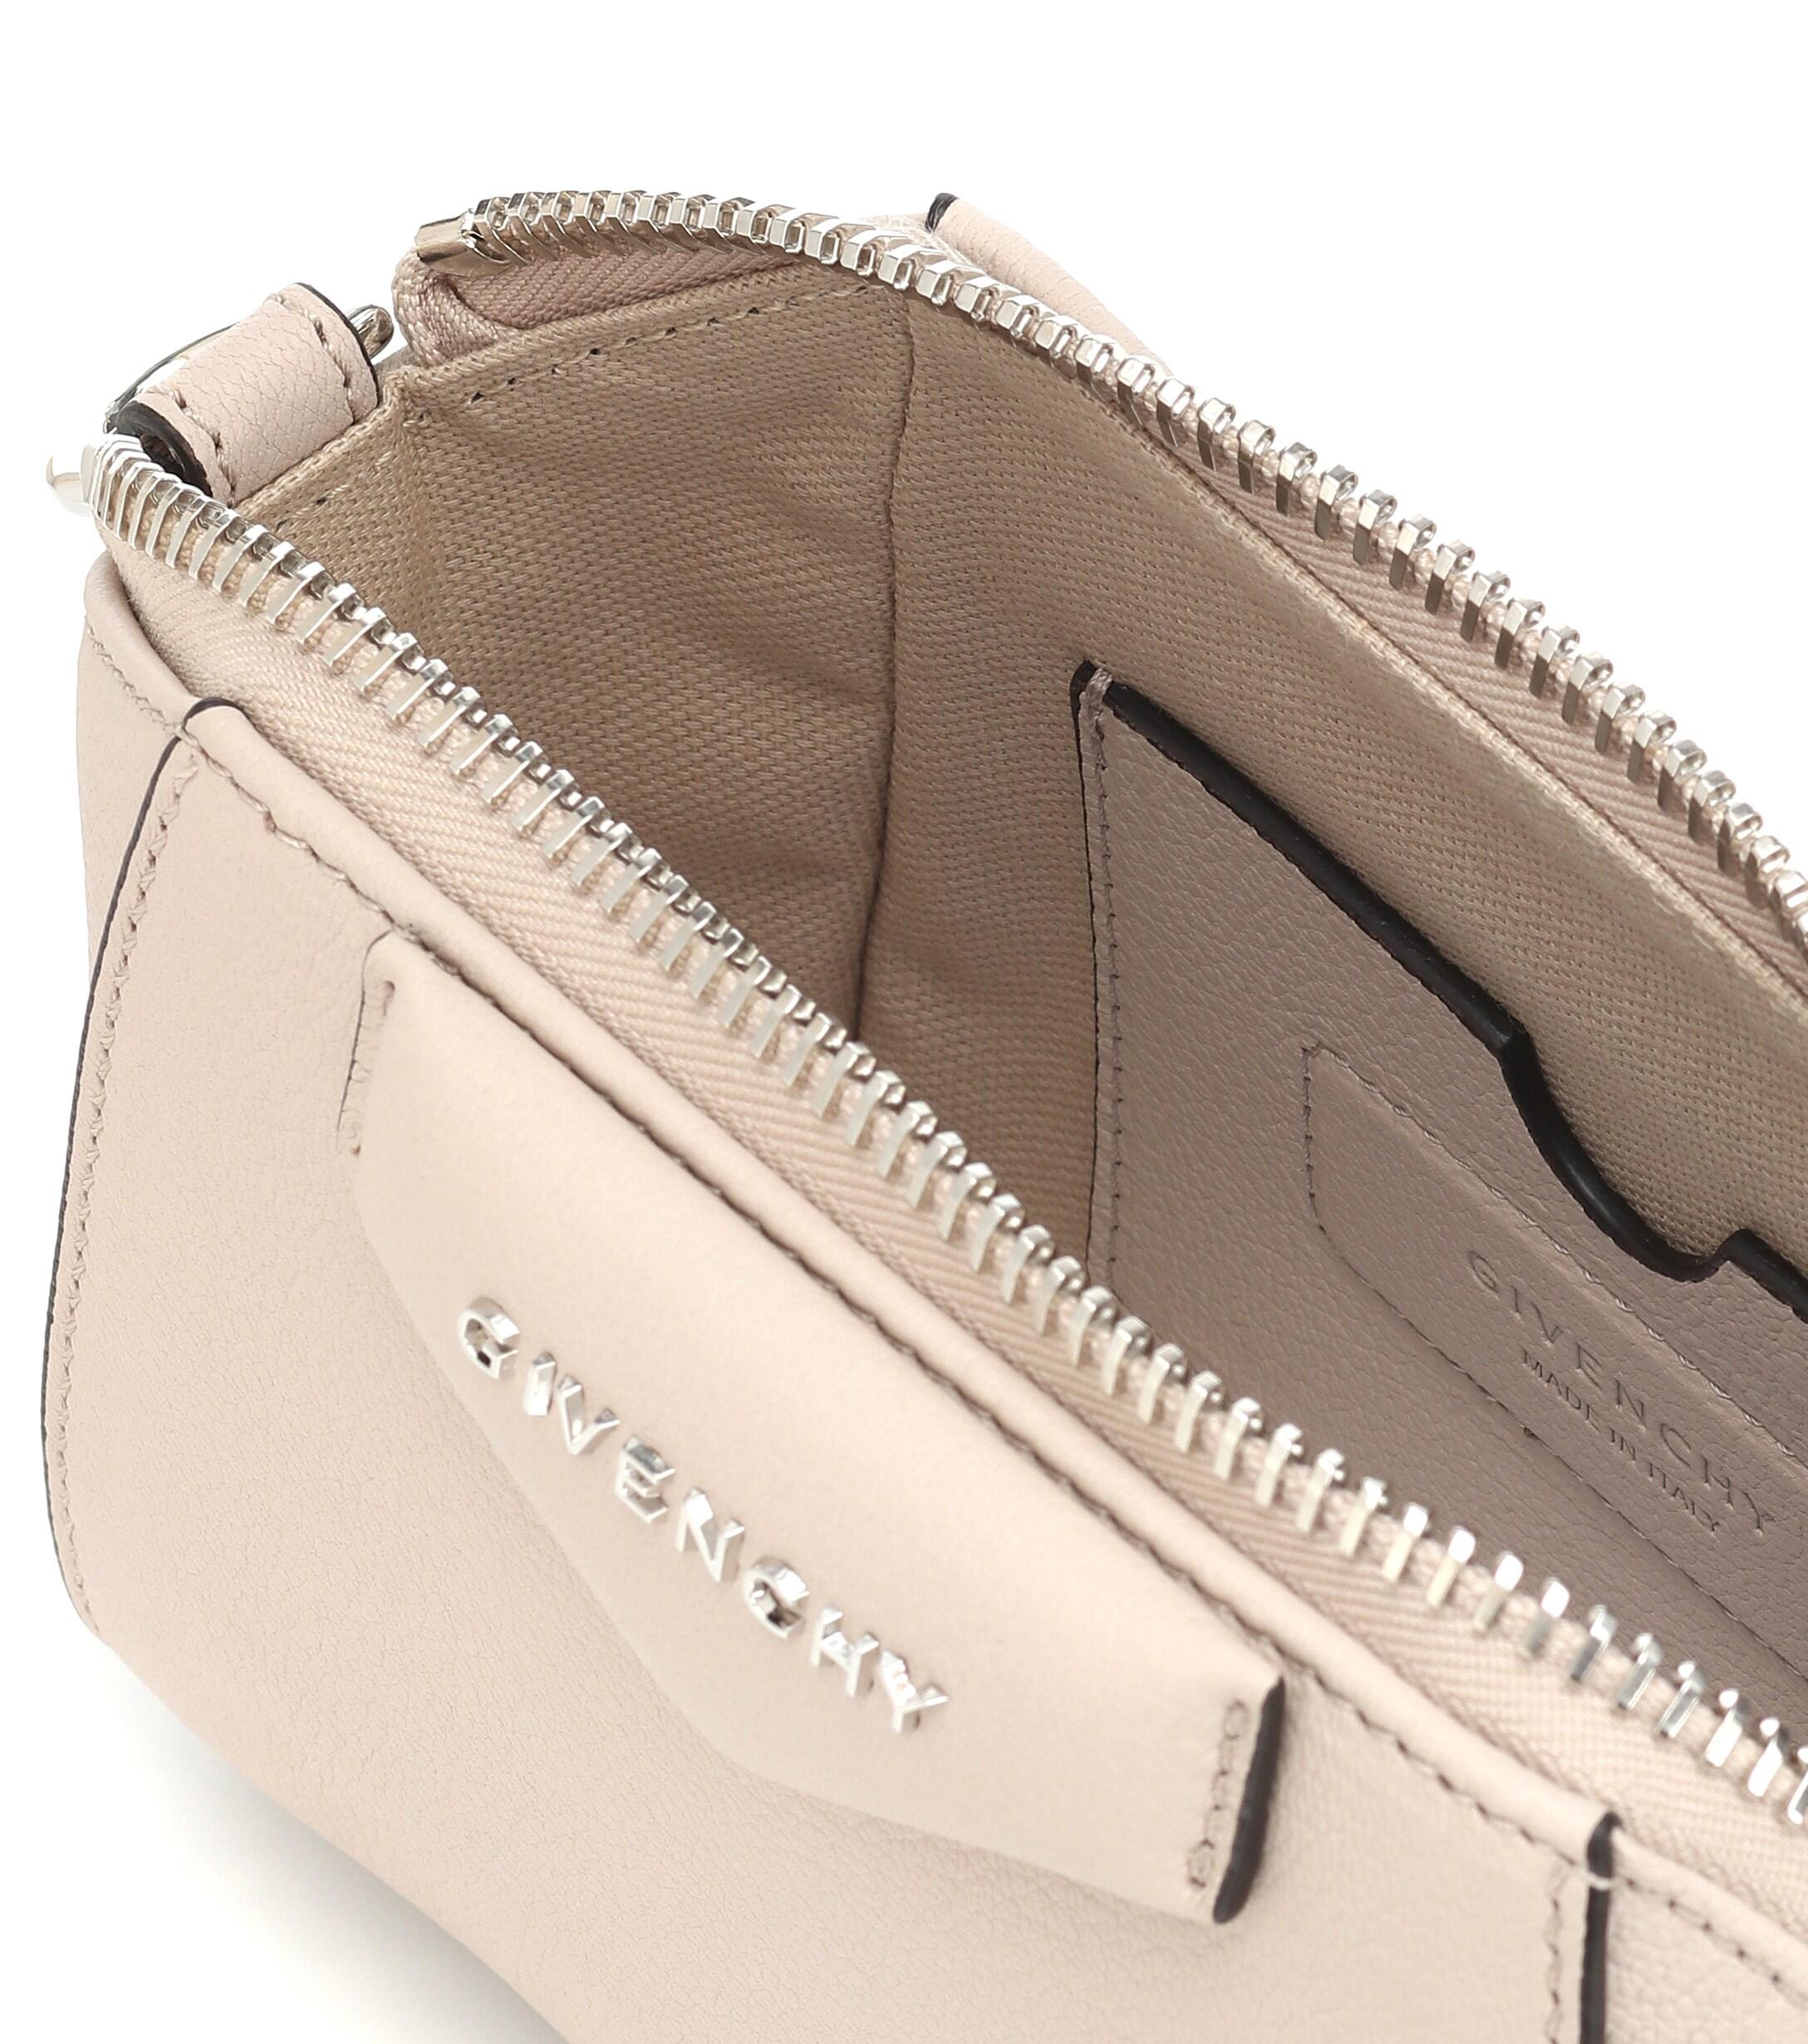 Givenchy Antigona Nano Leather Crossbody Bag in Natural | Lyst